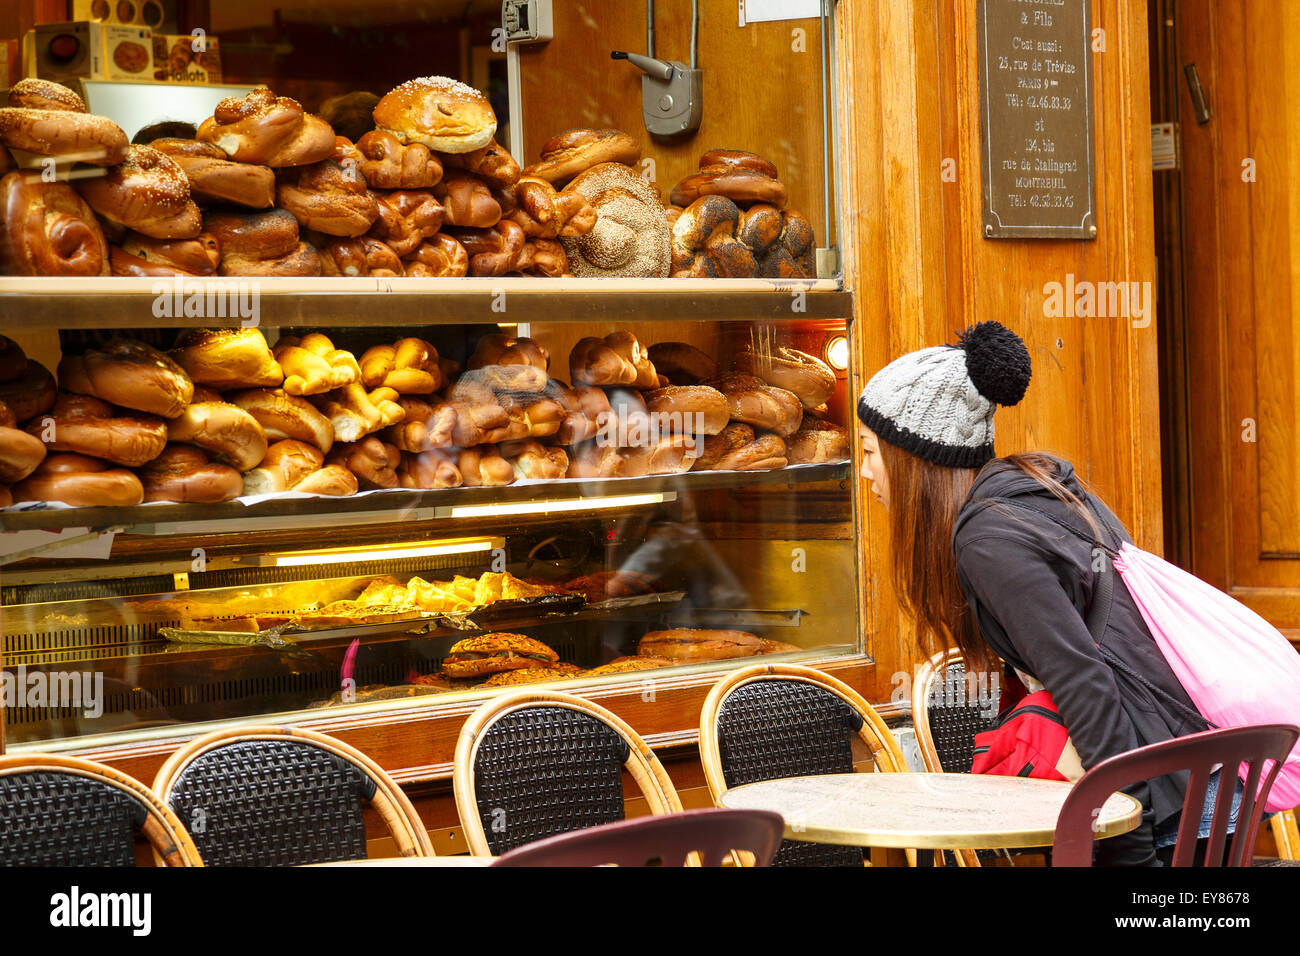 Rosiers street. Jewish Quarter. Paris. France. Europe Stock Photo